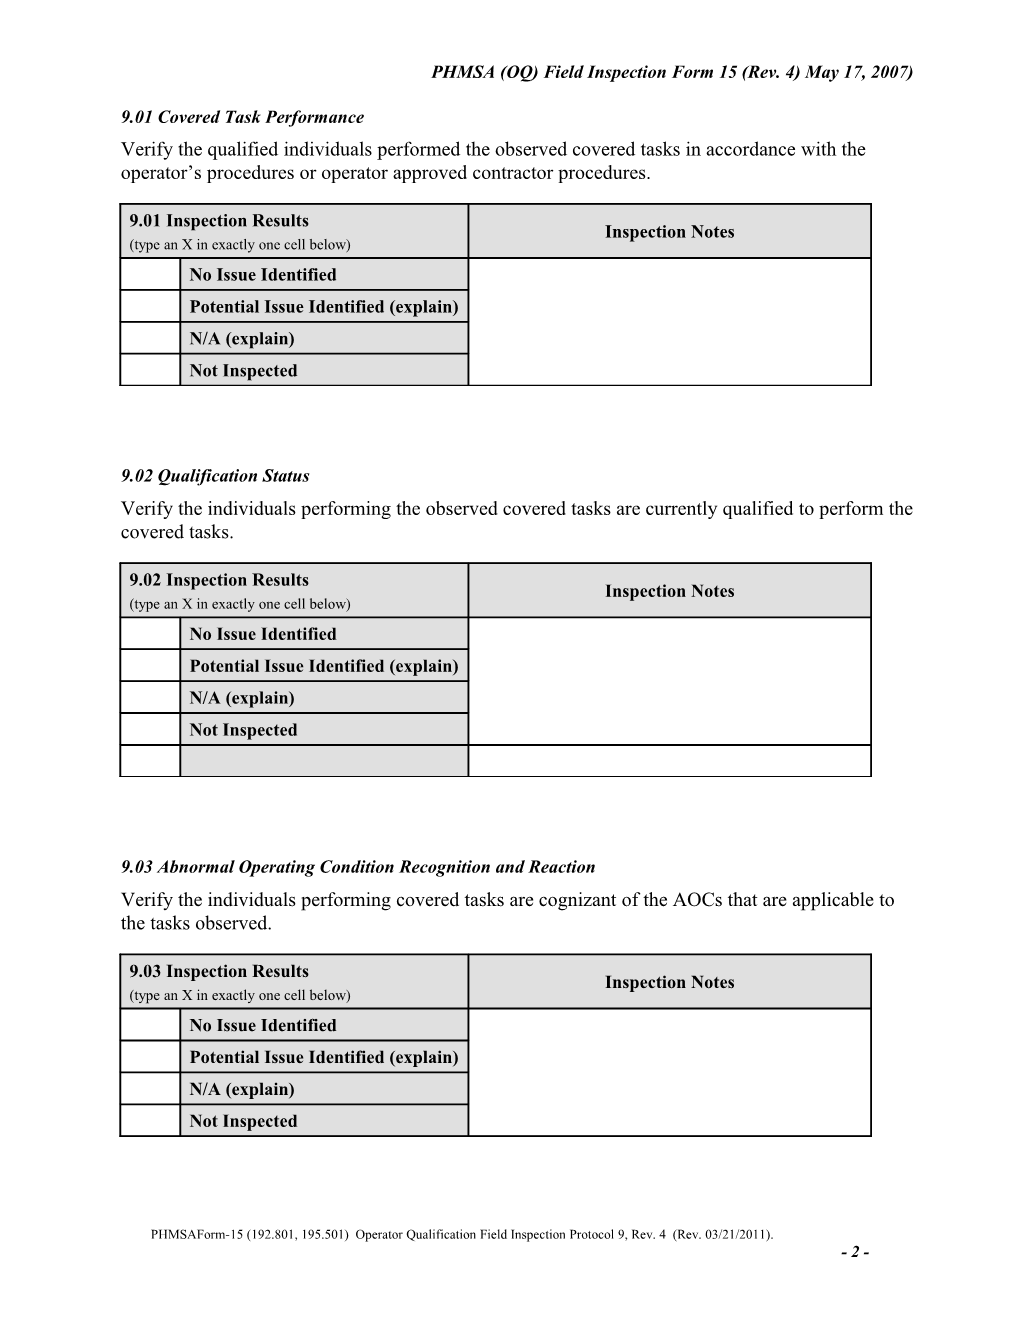 PHMSA Form 15 OQ Field Inspection Protocol Rev4